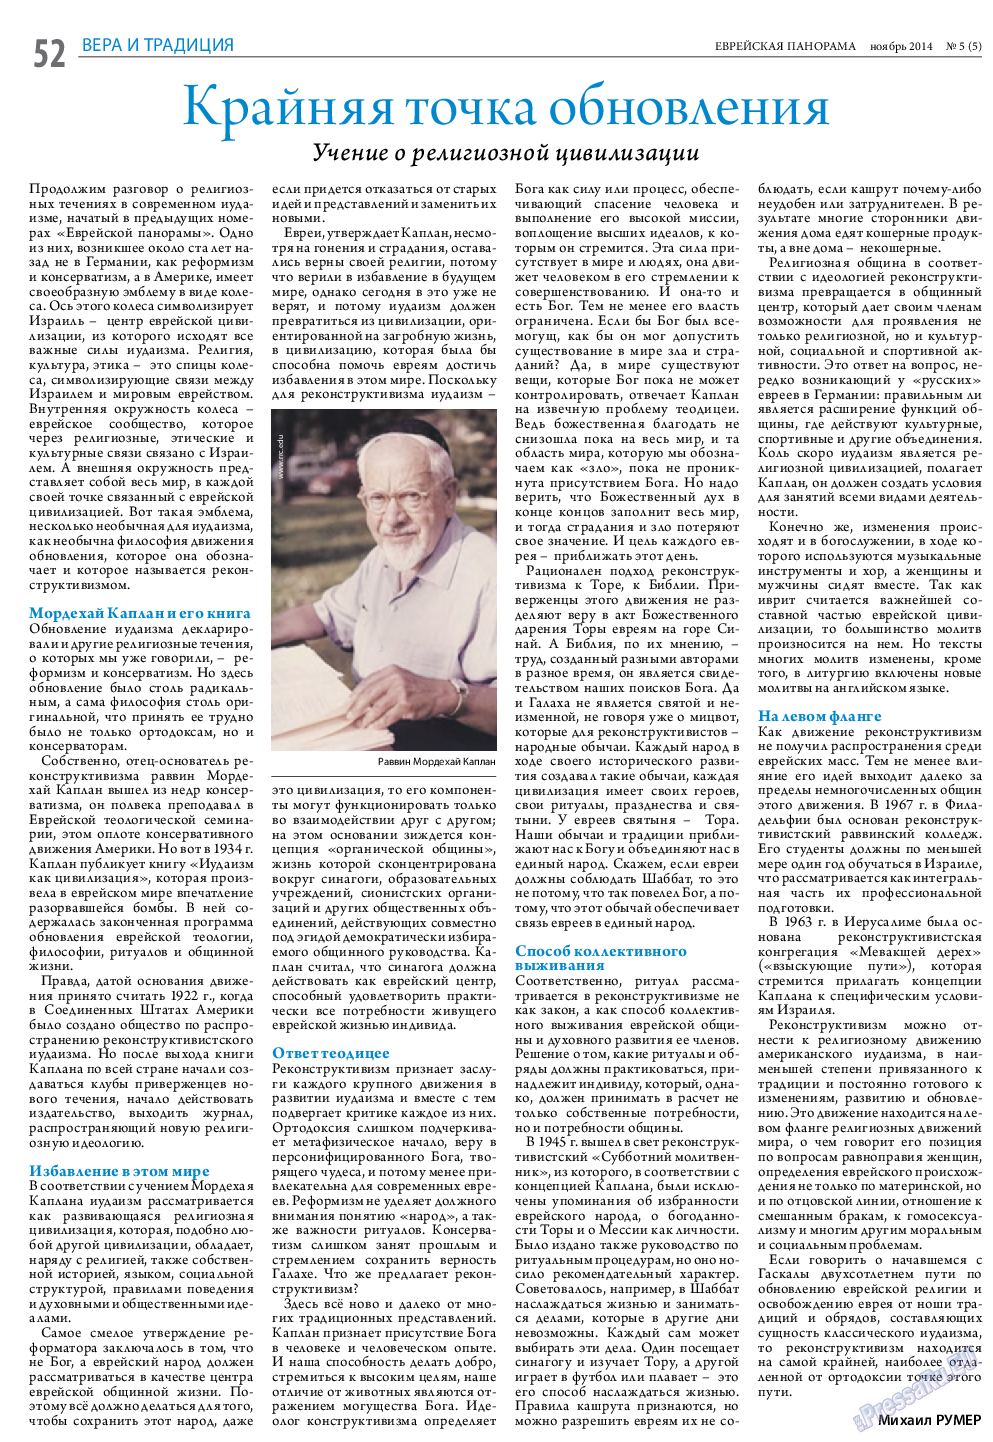 Еврейская панорама, газета. 2014 №5 стр.52